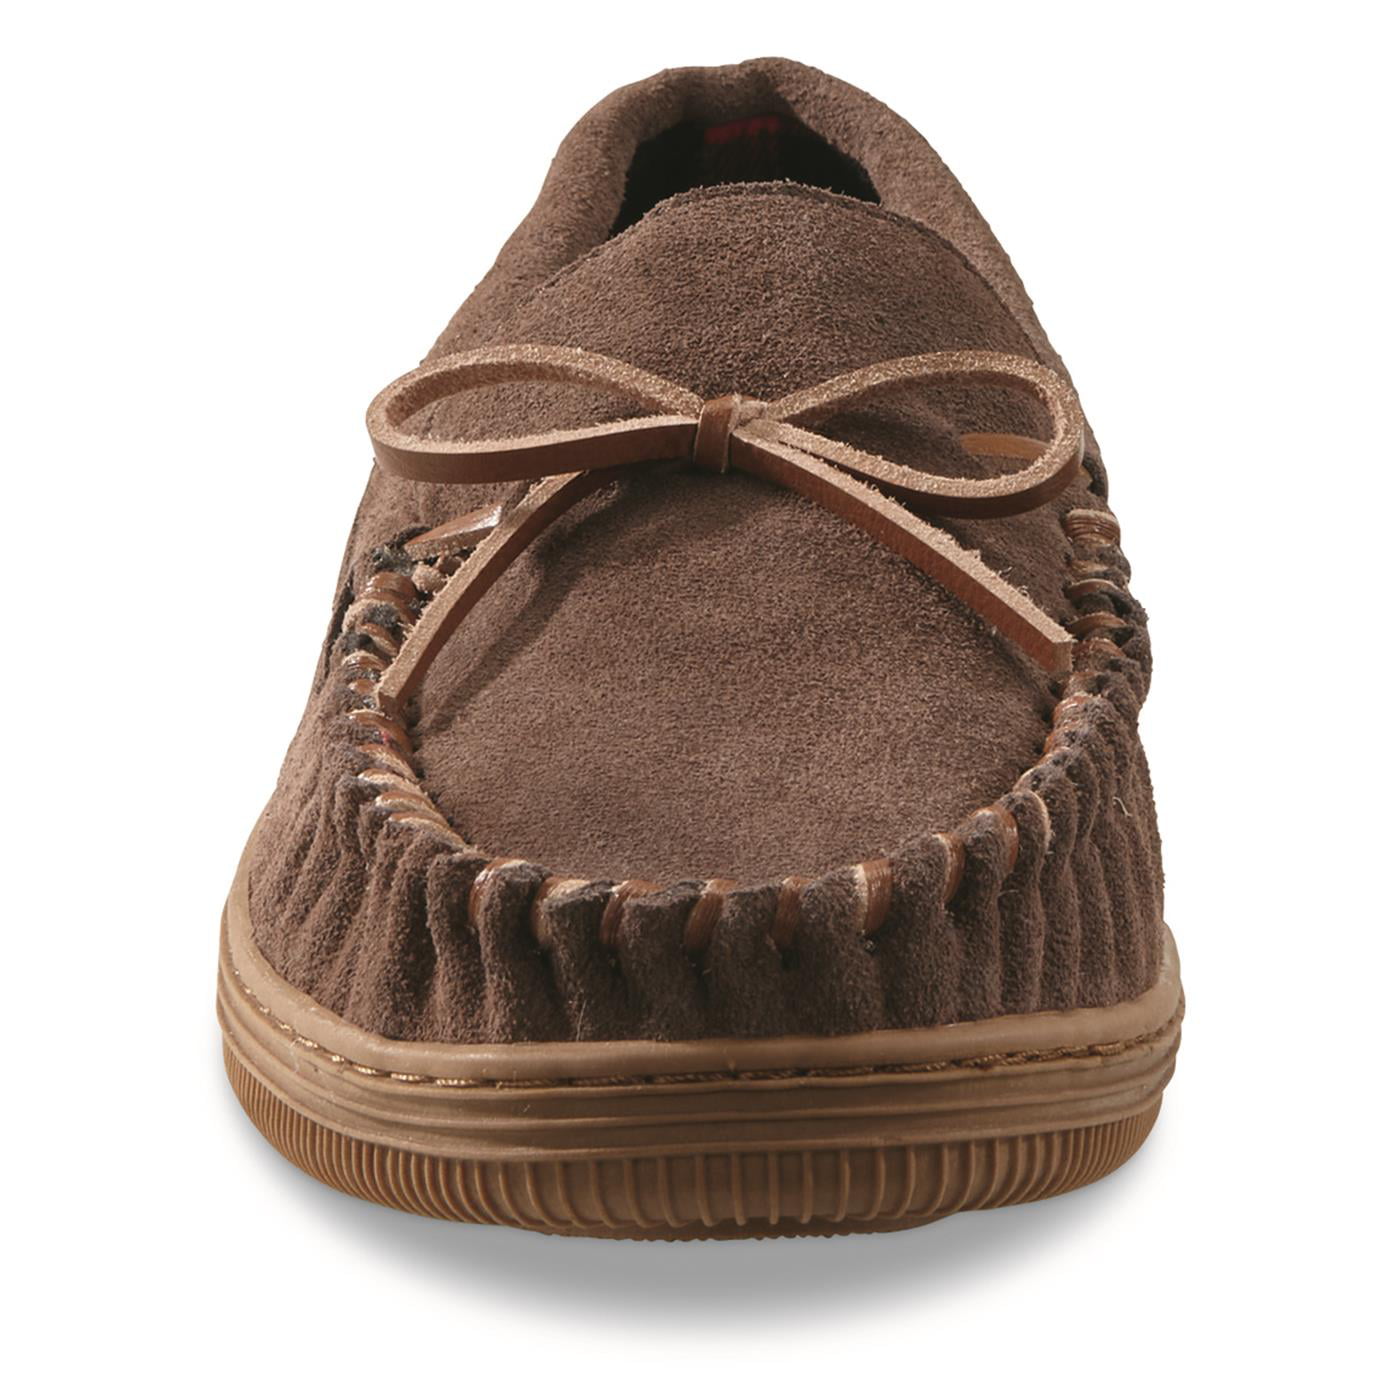 Kmart Basic Editions SG Footwear Men's Slippers Loafers 20738 NAJ2 Med Size  9-10 723261422489 | eBay